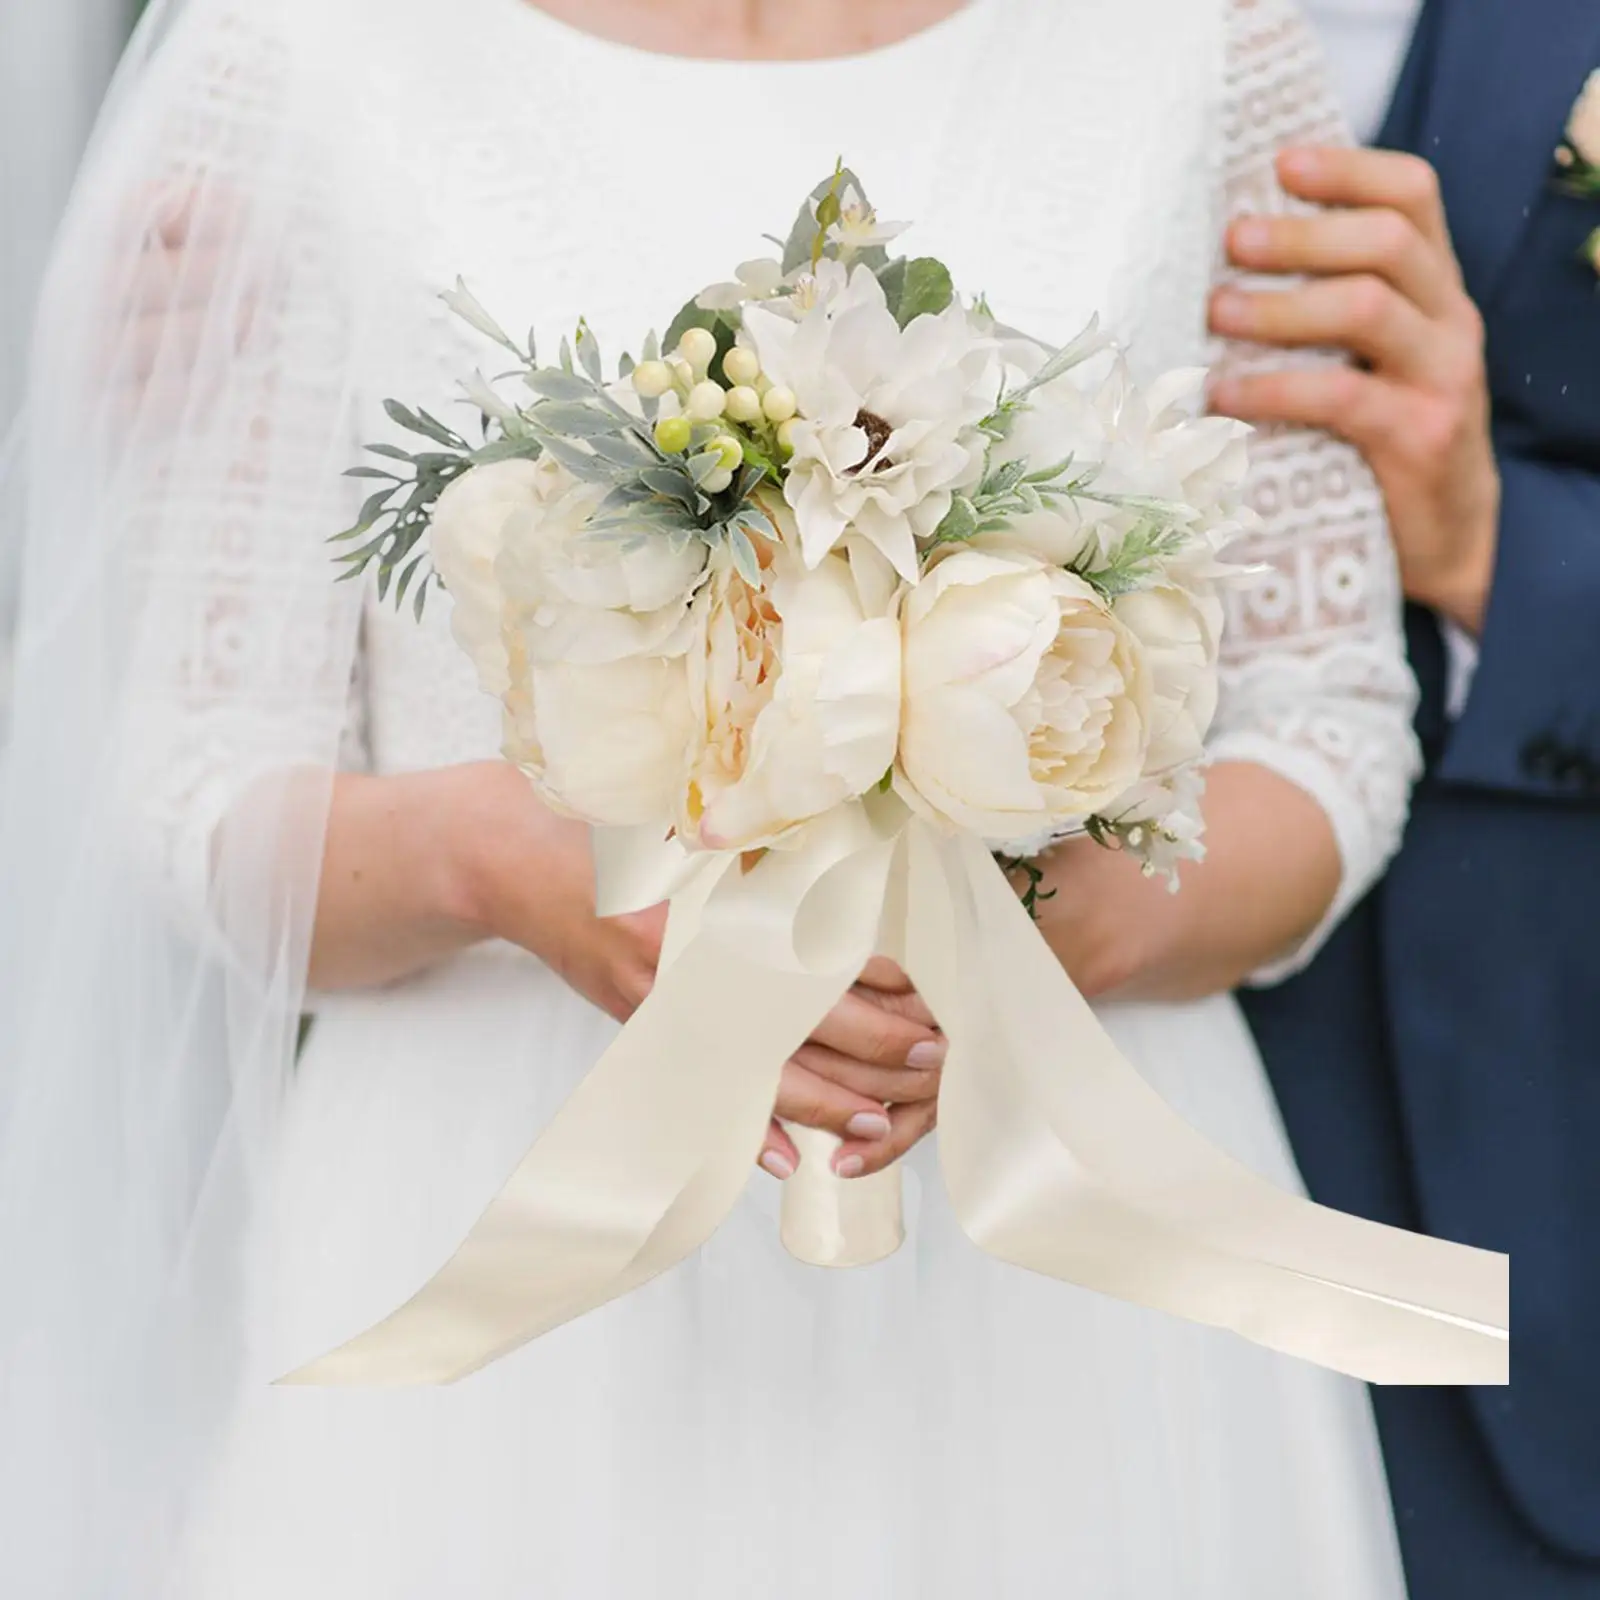 White Artificial Peony Flowers Bridal Wedding Bouquets Photo Props Exquisite Romantic Decorative Wedding Decoration Handmade